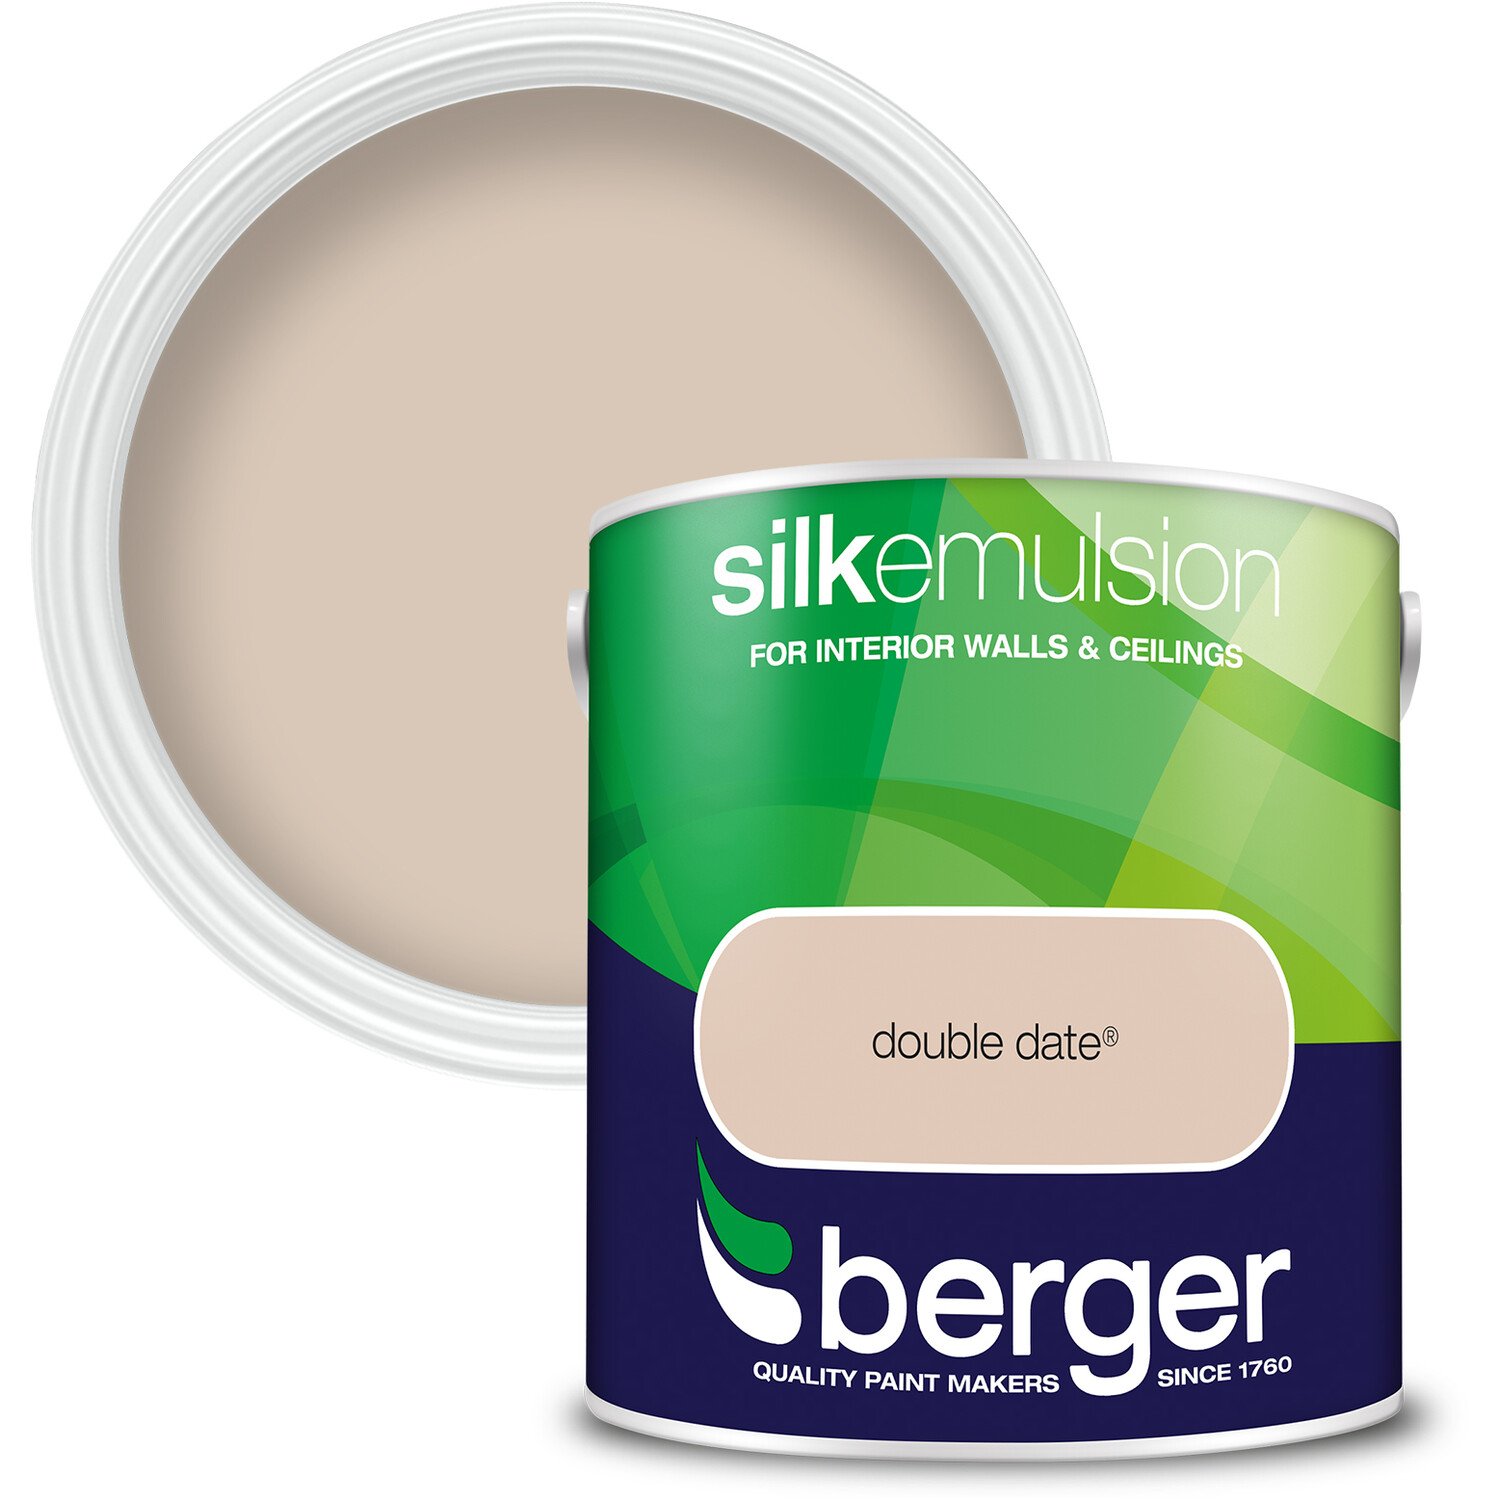 Berger Walls & Ceilings Double Date Silk Emulsion Paint 2.5L Image 1